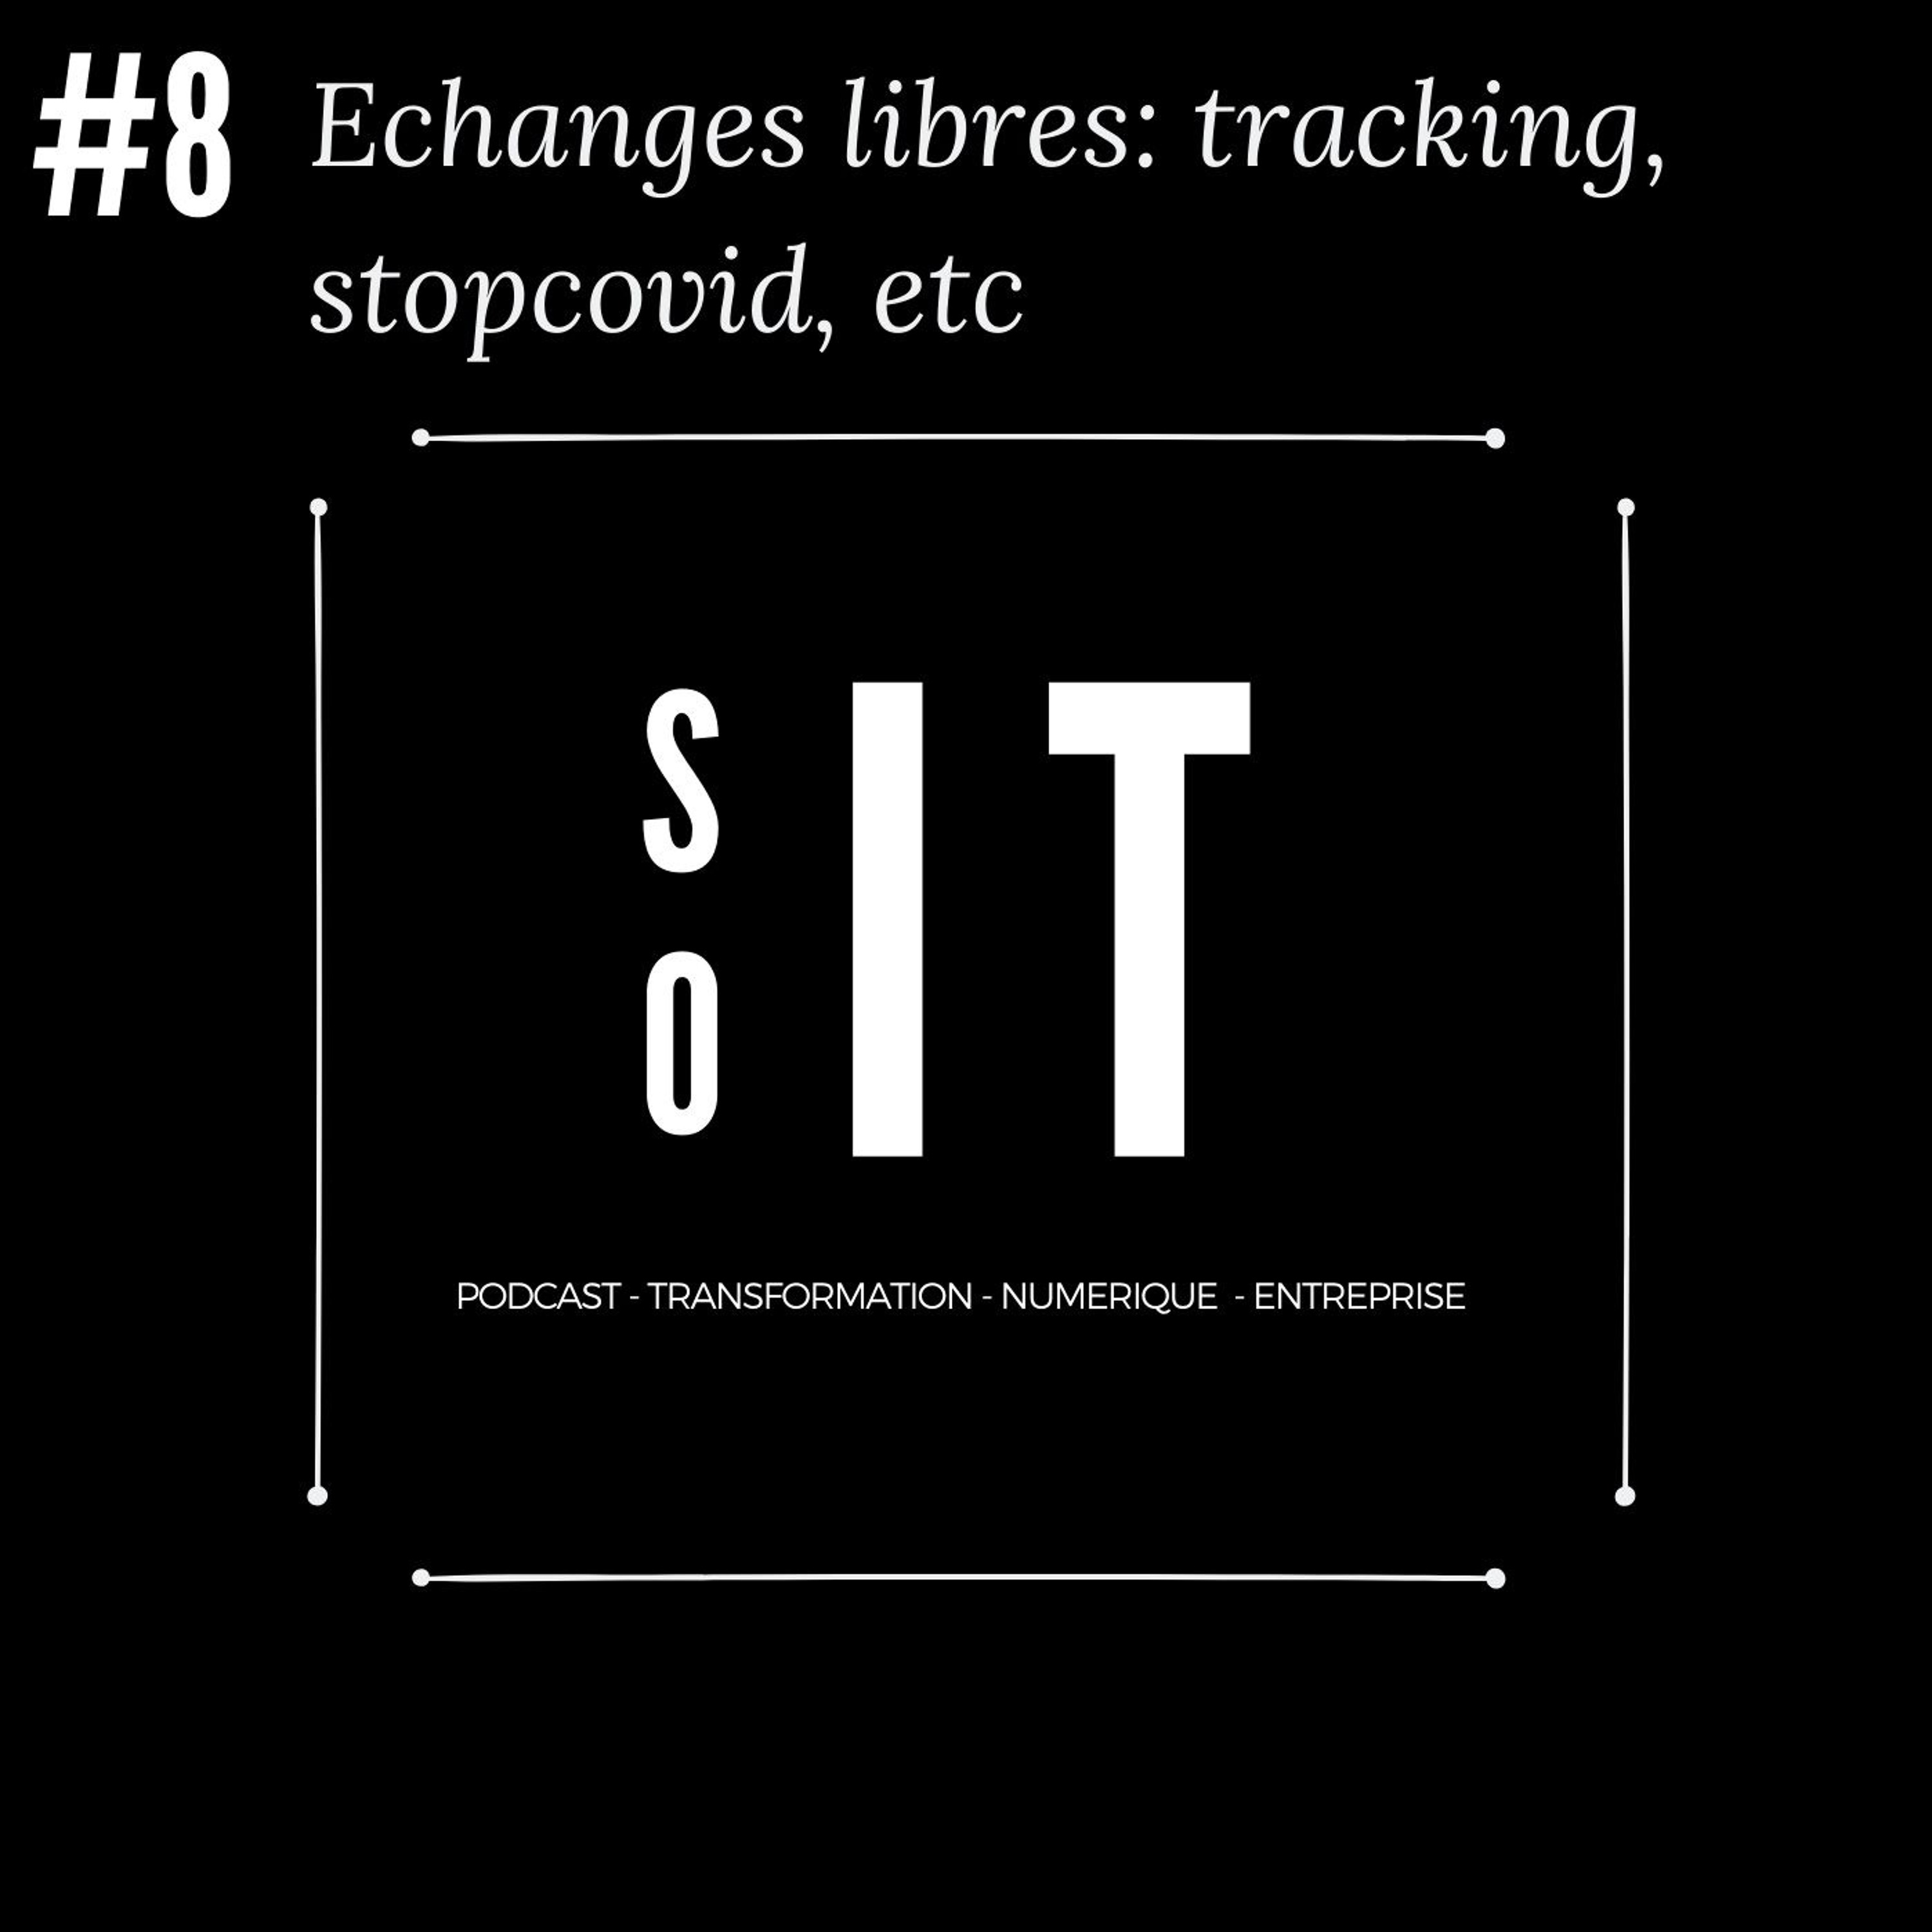 Episode 8 - Echanges libres: tracking, stopcovid, etc